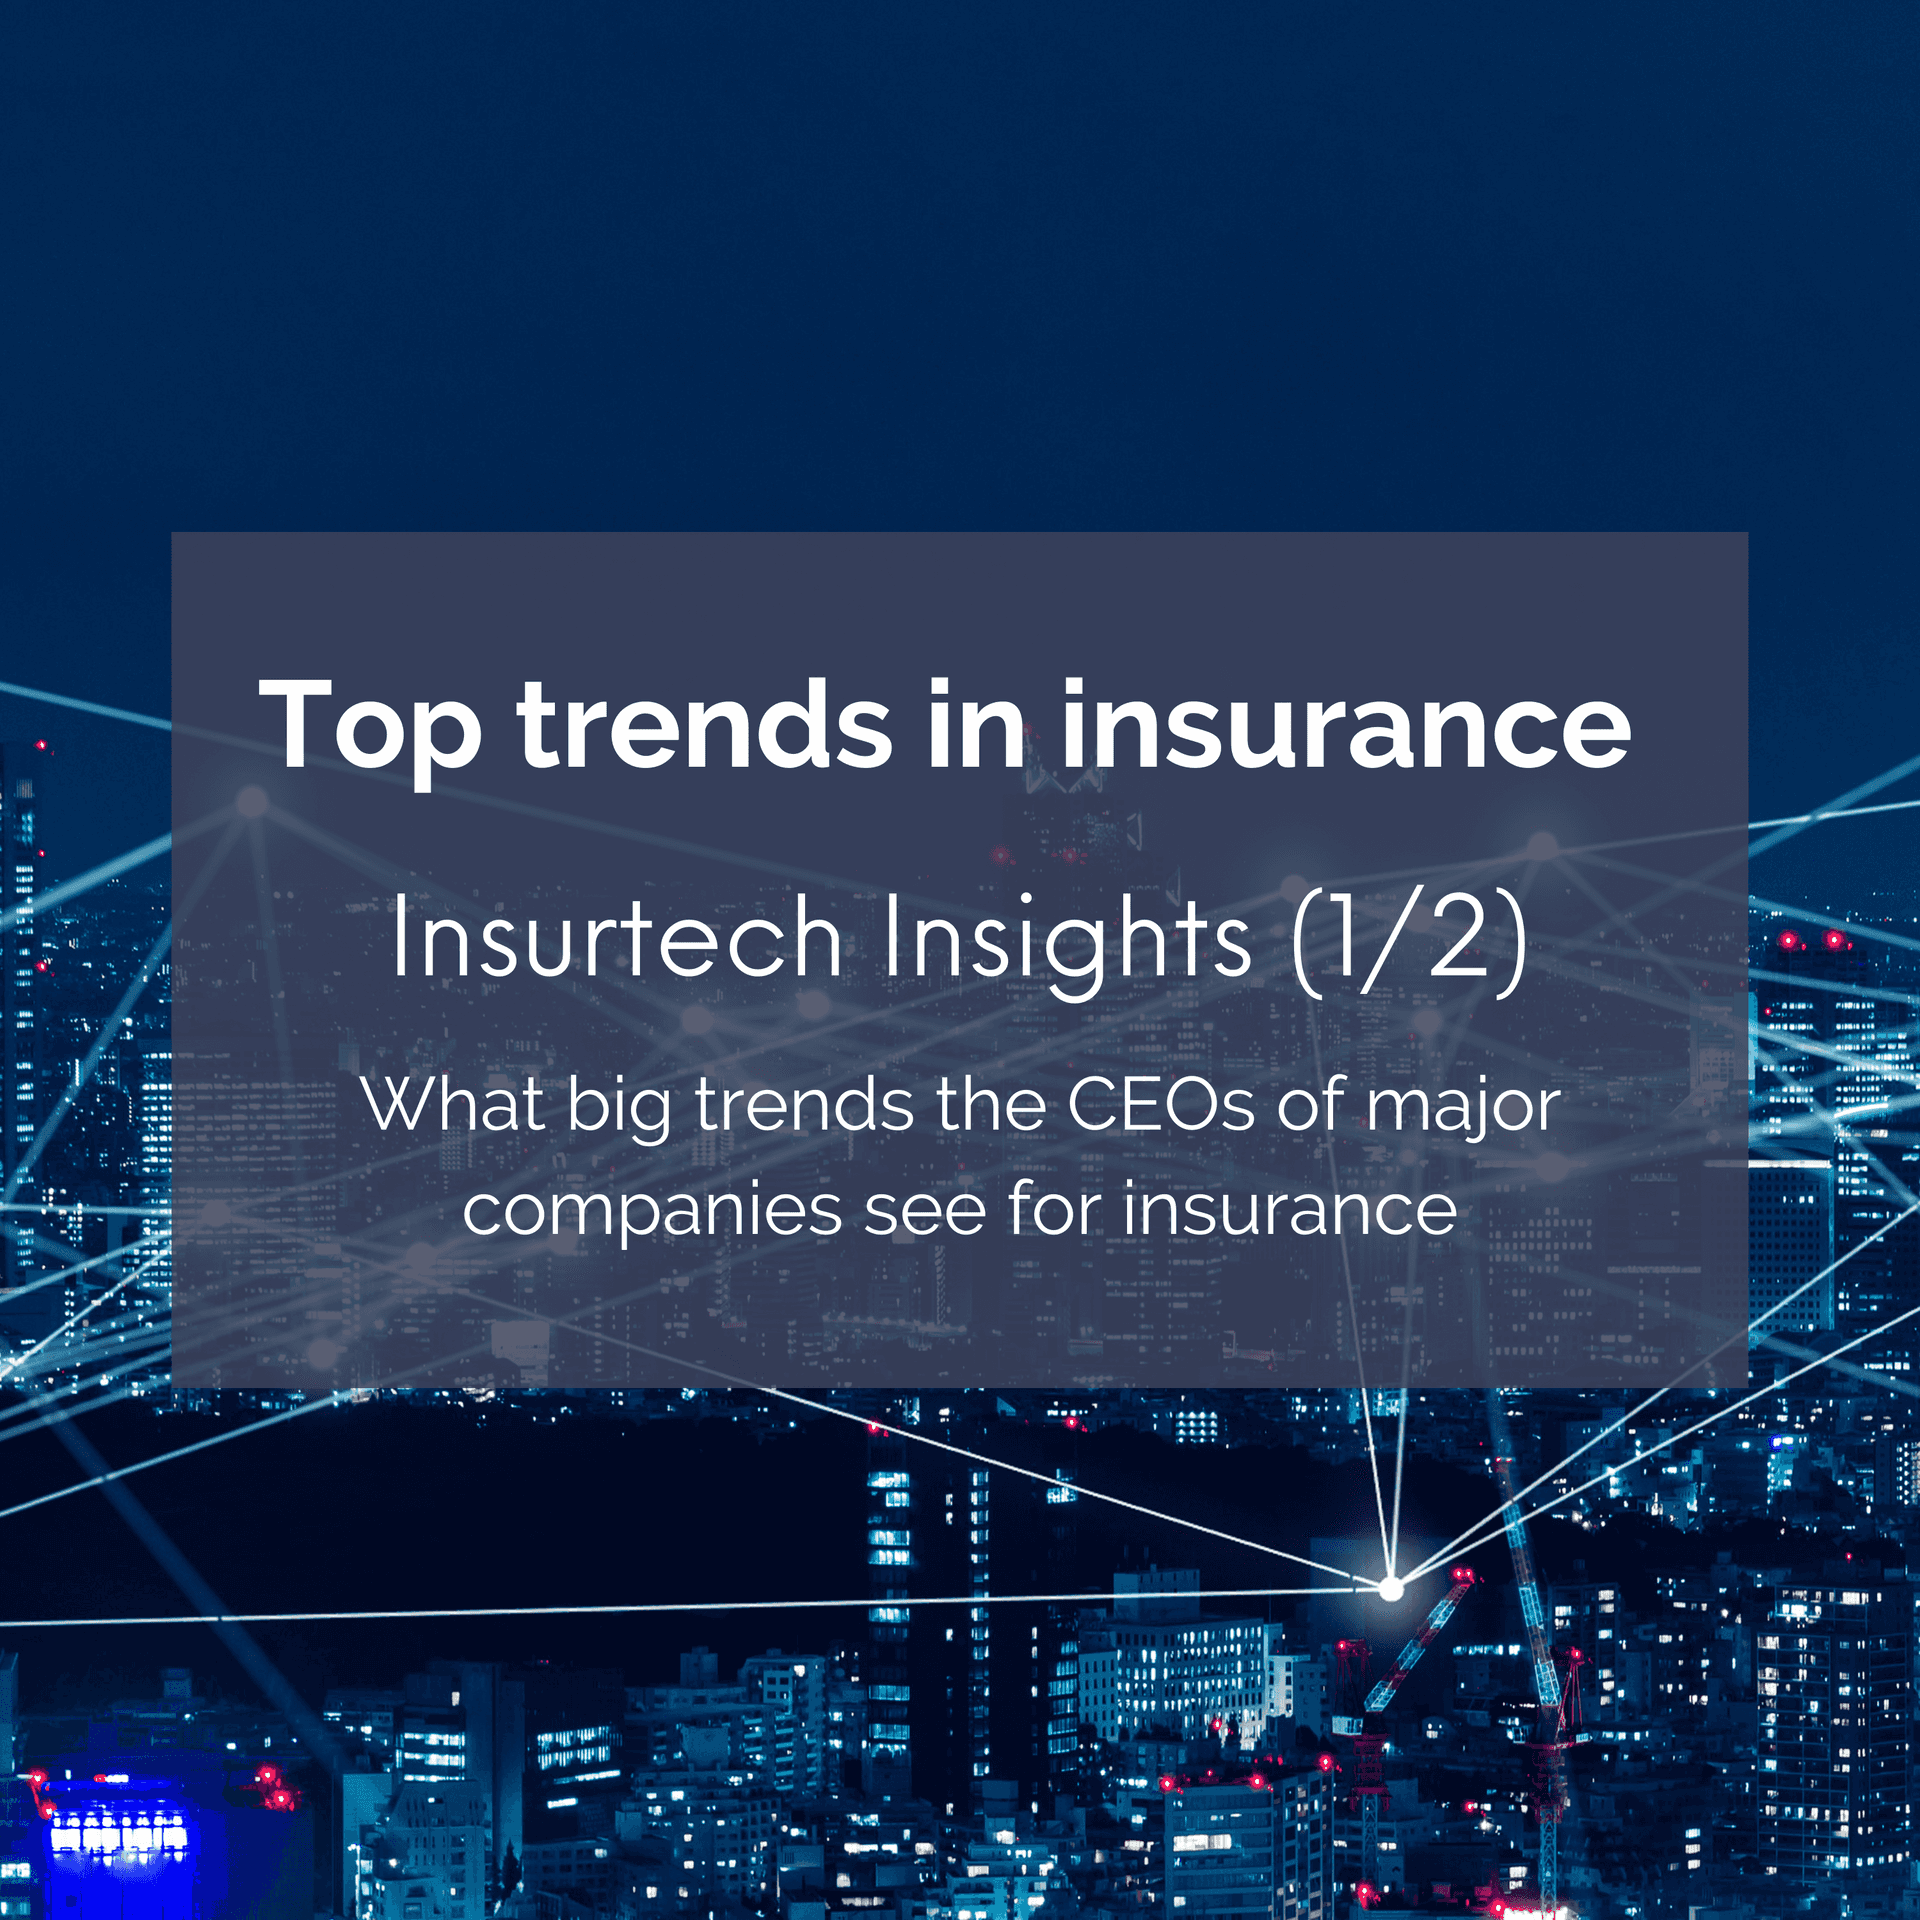 Top trends in insurance